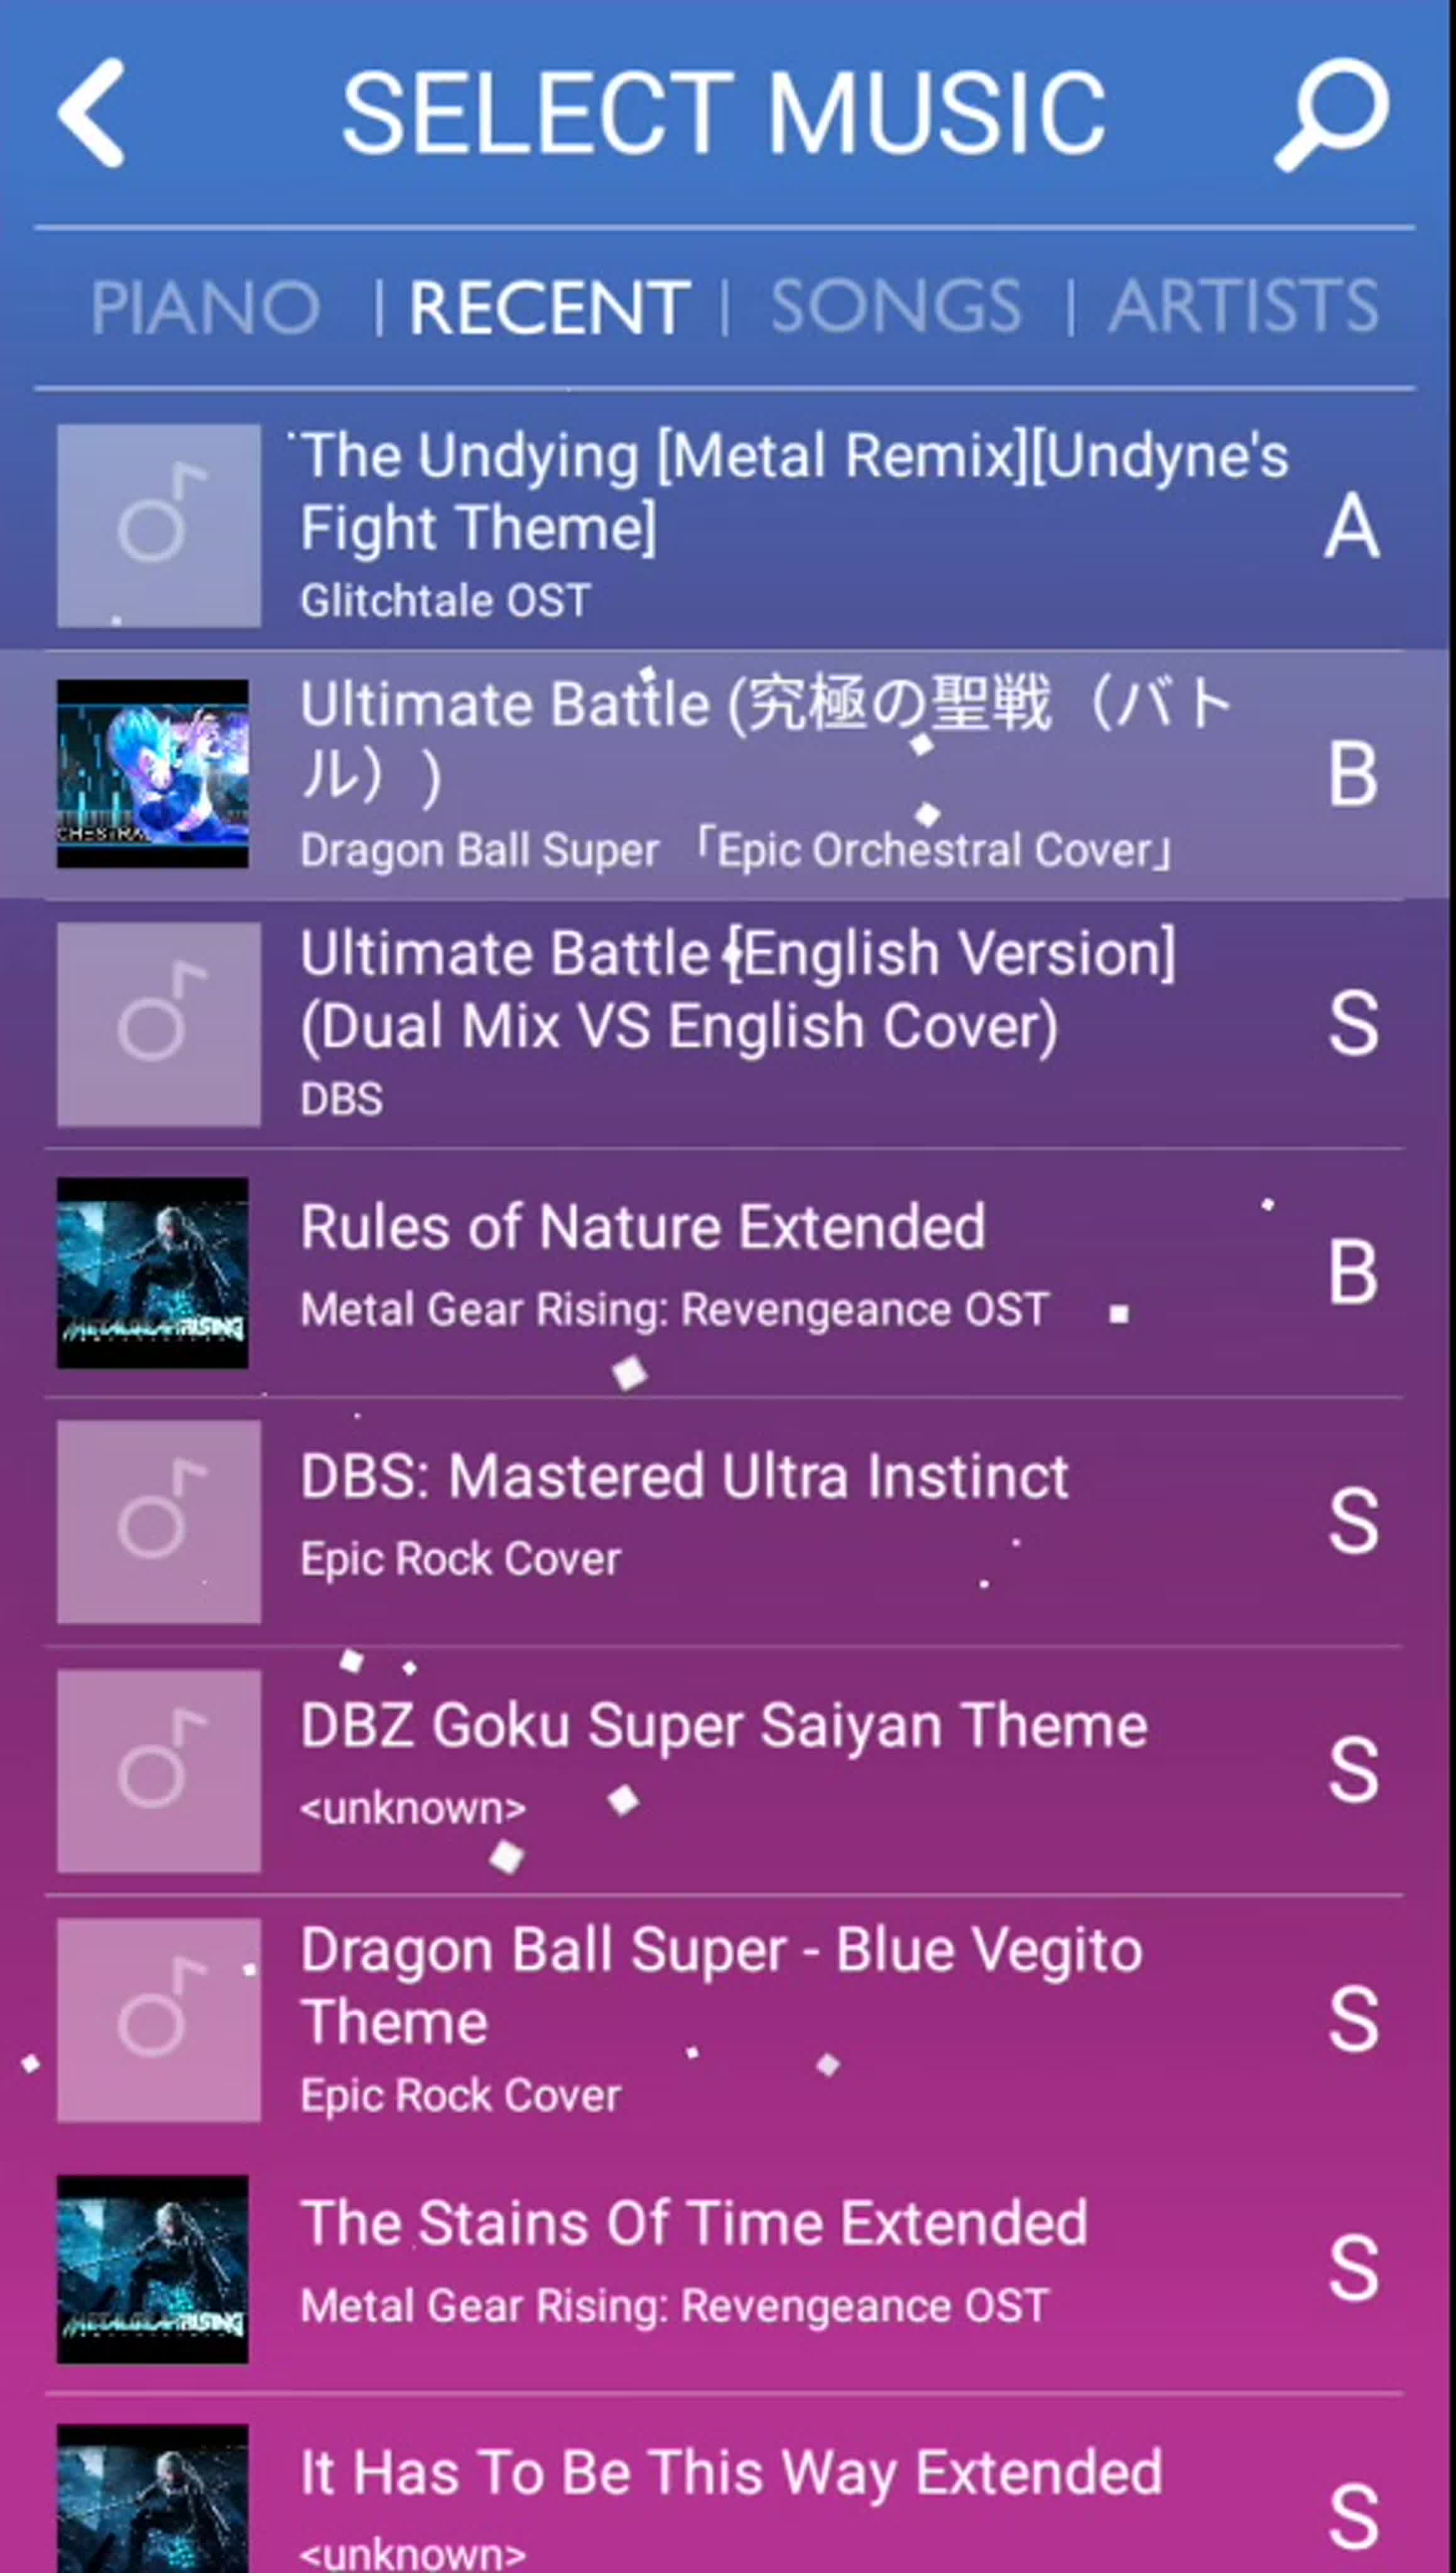 Dragon Ball Super - Blue Vegito Theme